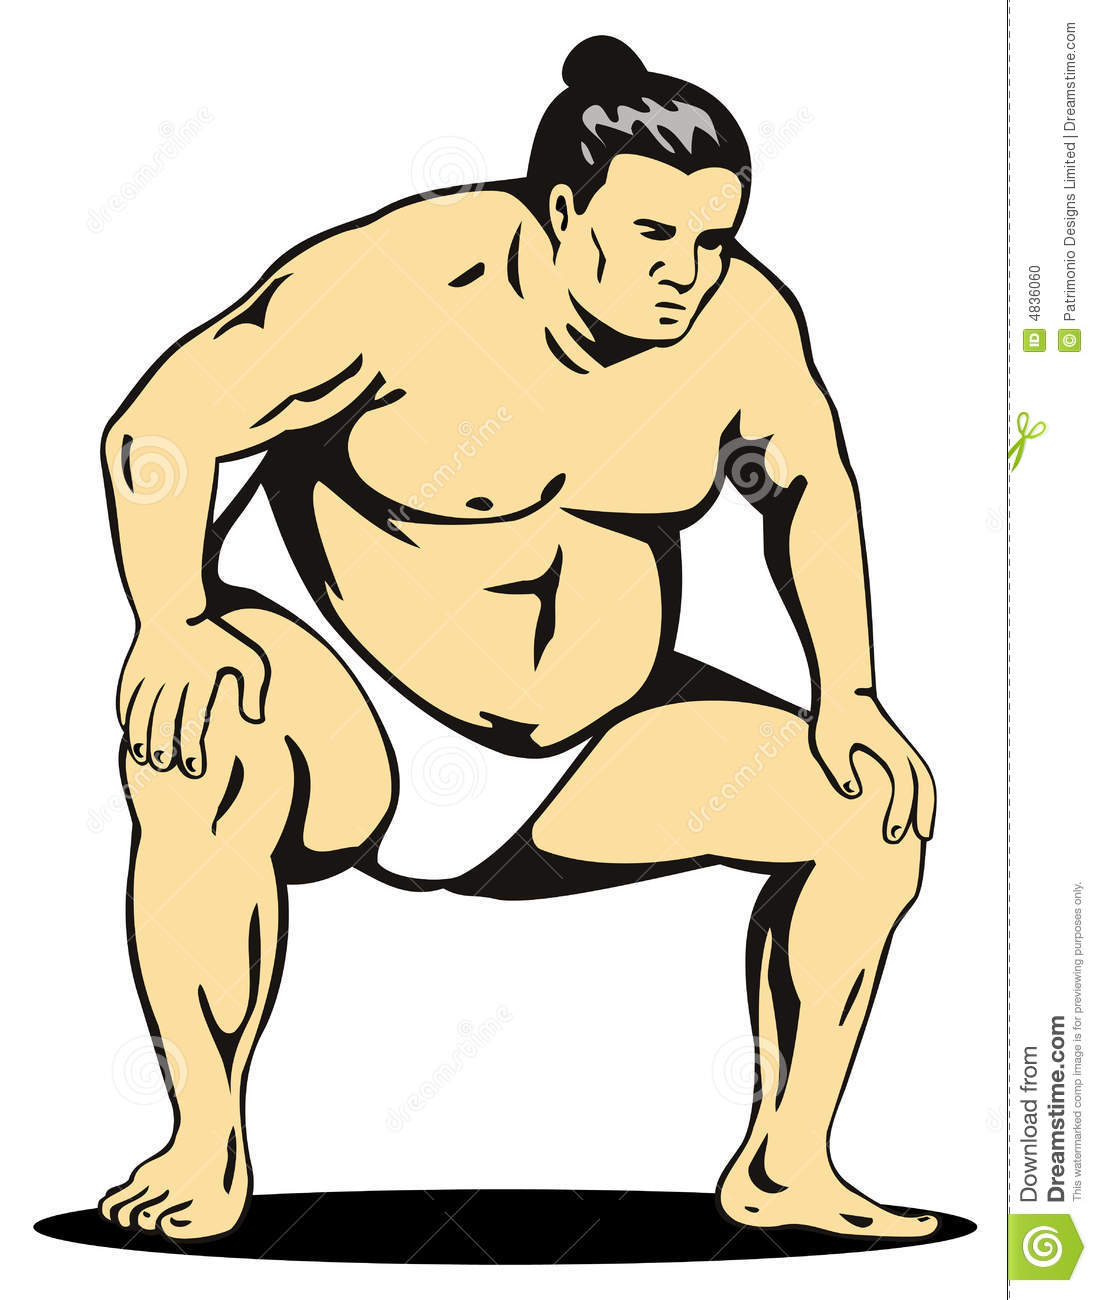 Sumo Wrestler Fighting Stance Stock Photo   Image  4836060